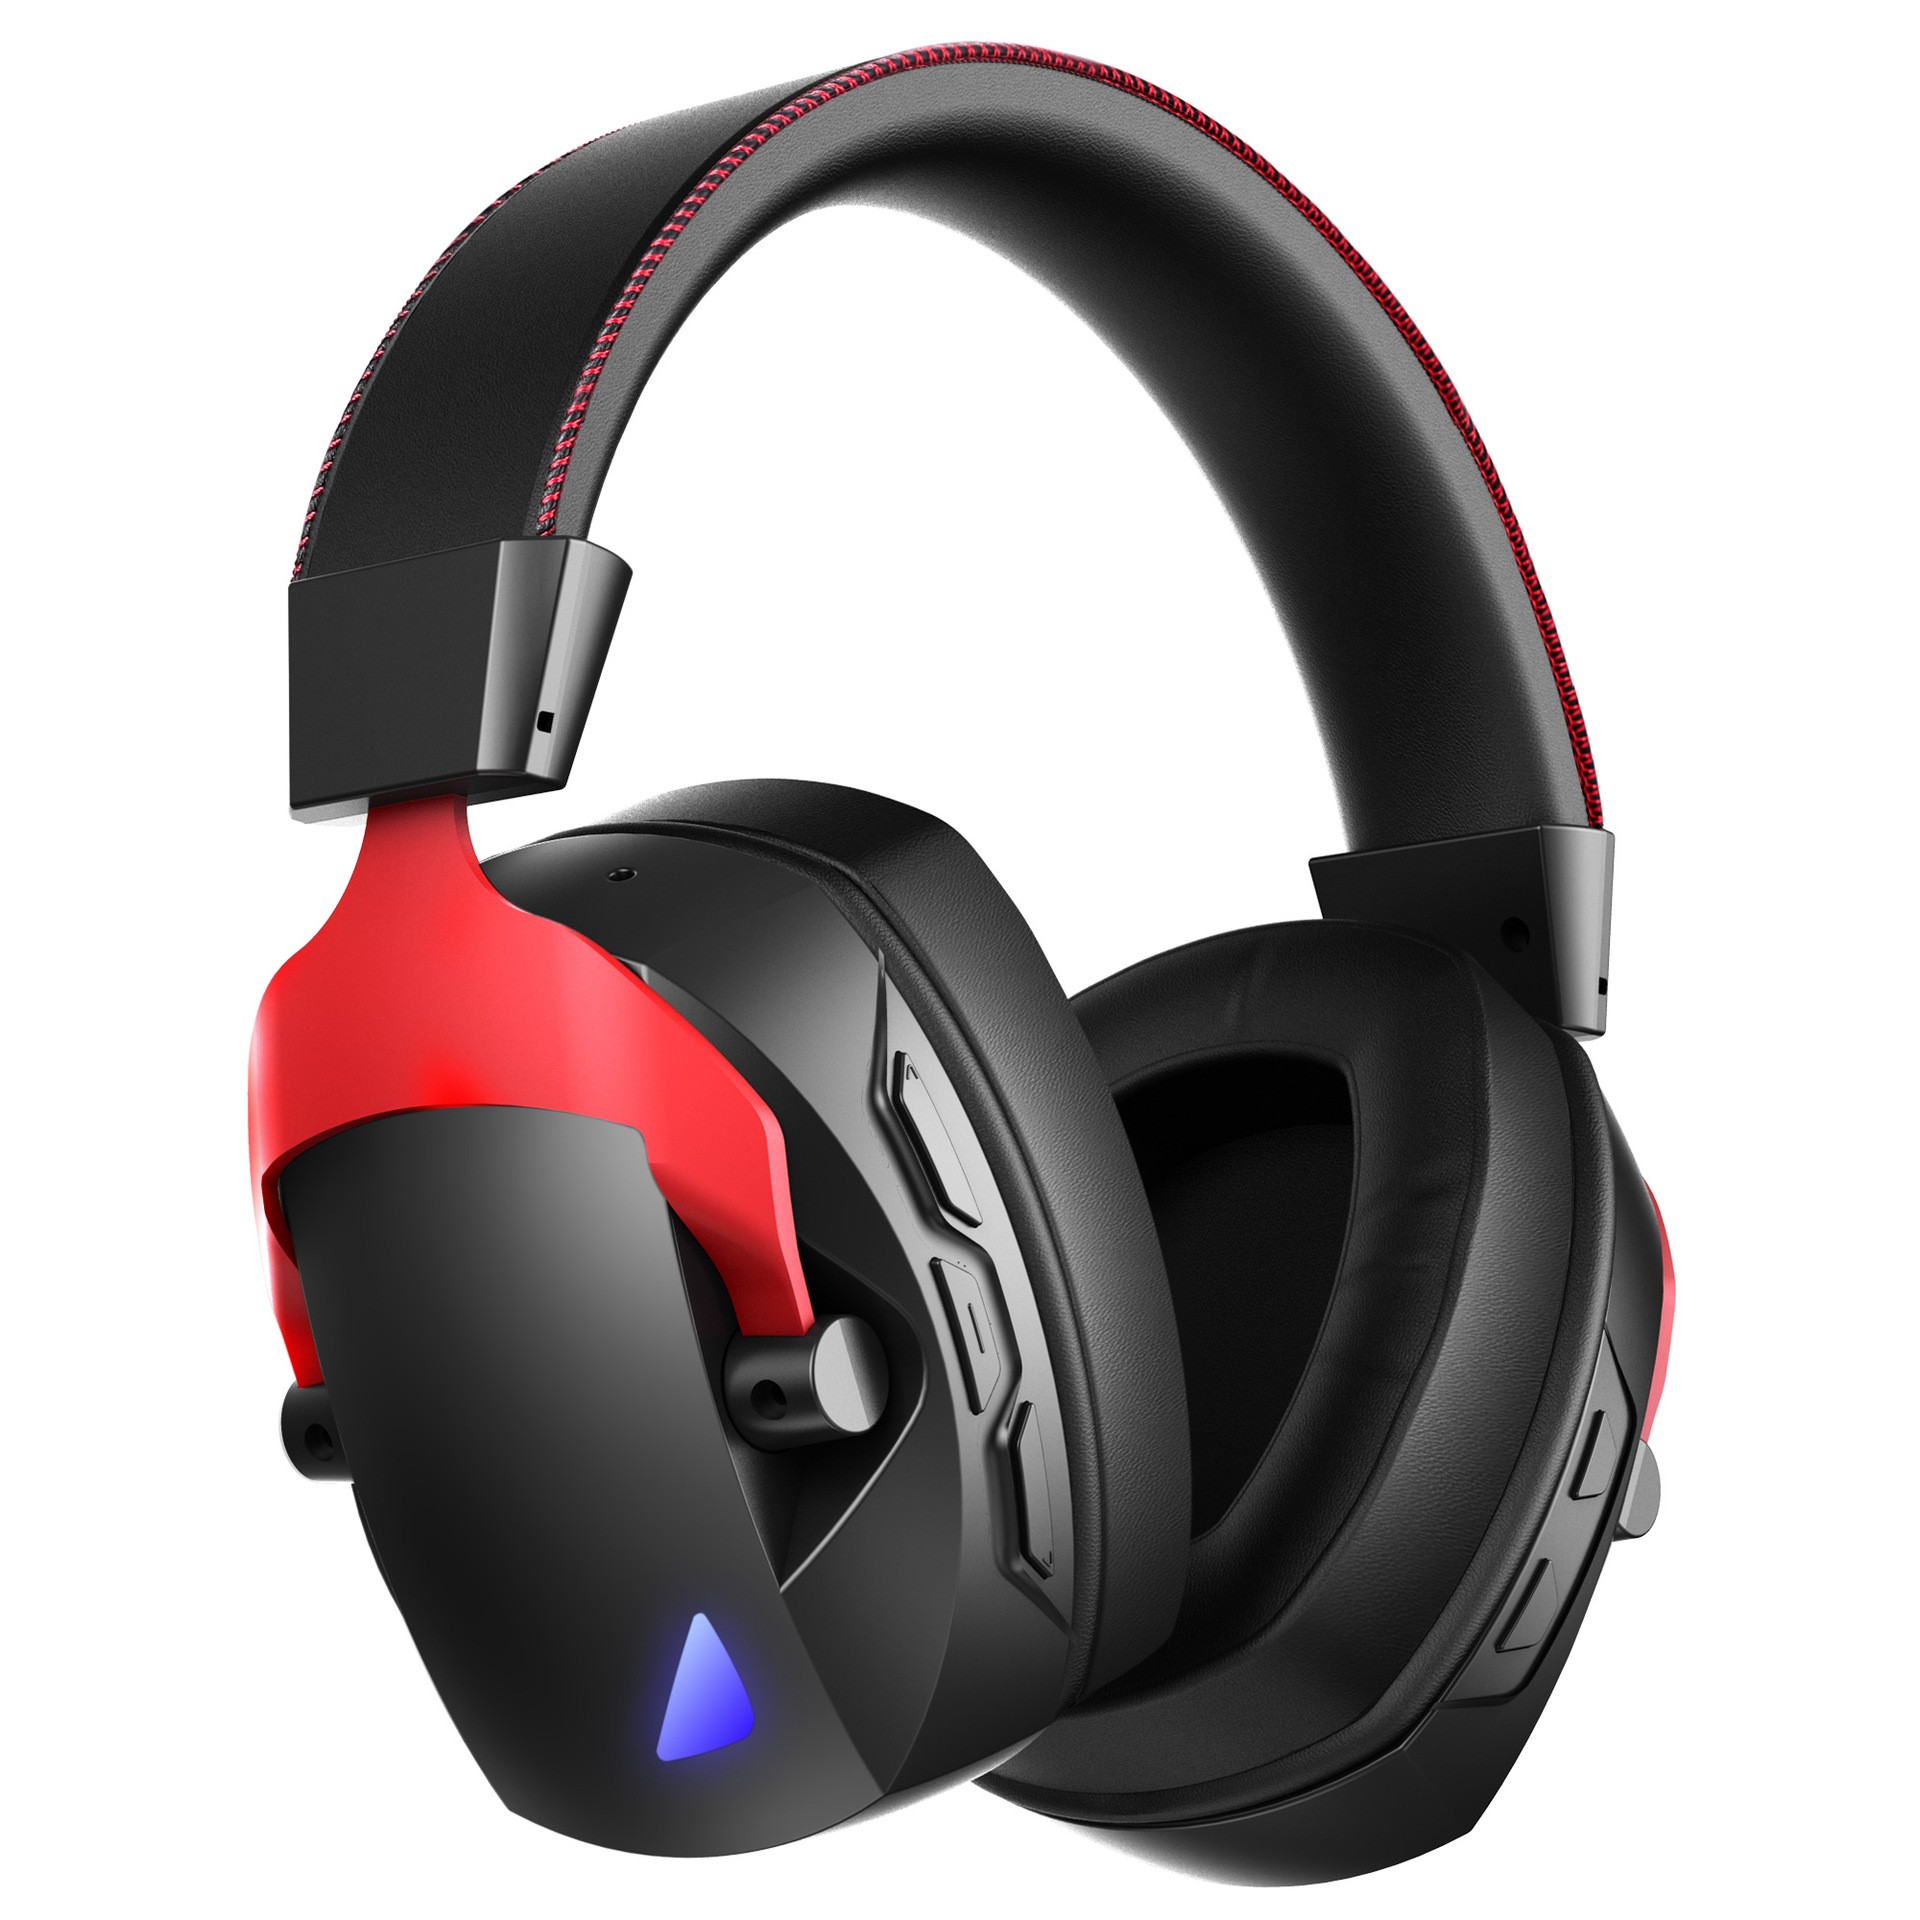 BL-100-Bluetooth-Headphones-Stereo-Over-Ear-Wireless-Headset-Professional-Recording-Studio-Monitor-DJ-Gaming-Headphones-2